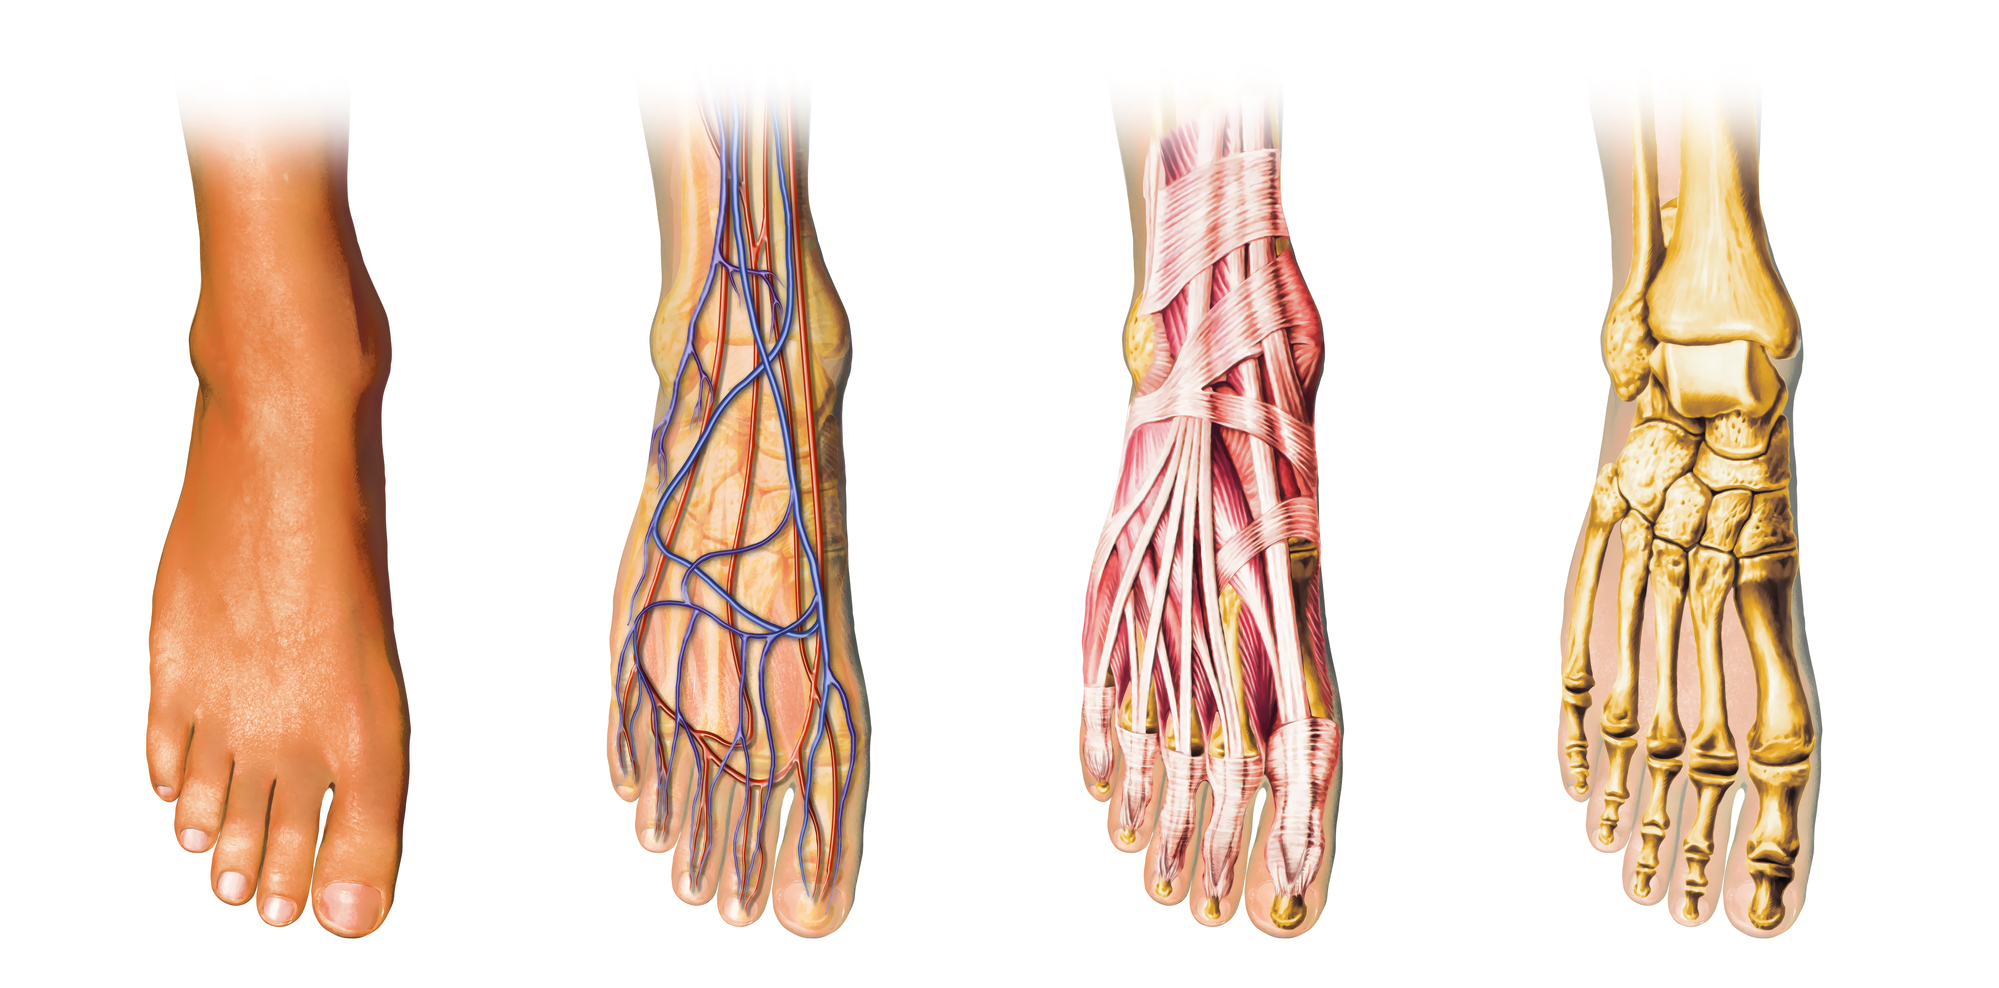 foot pain diagnosis diagram